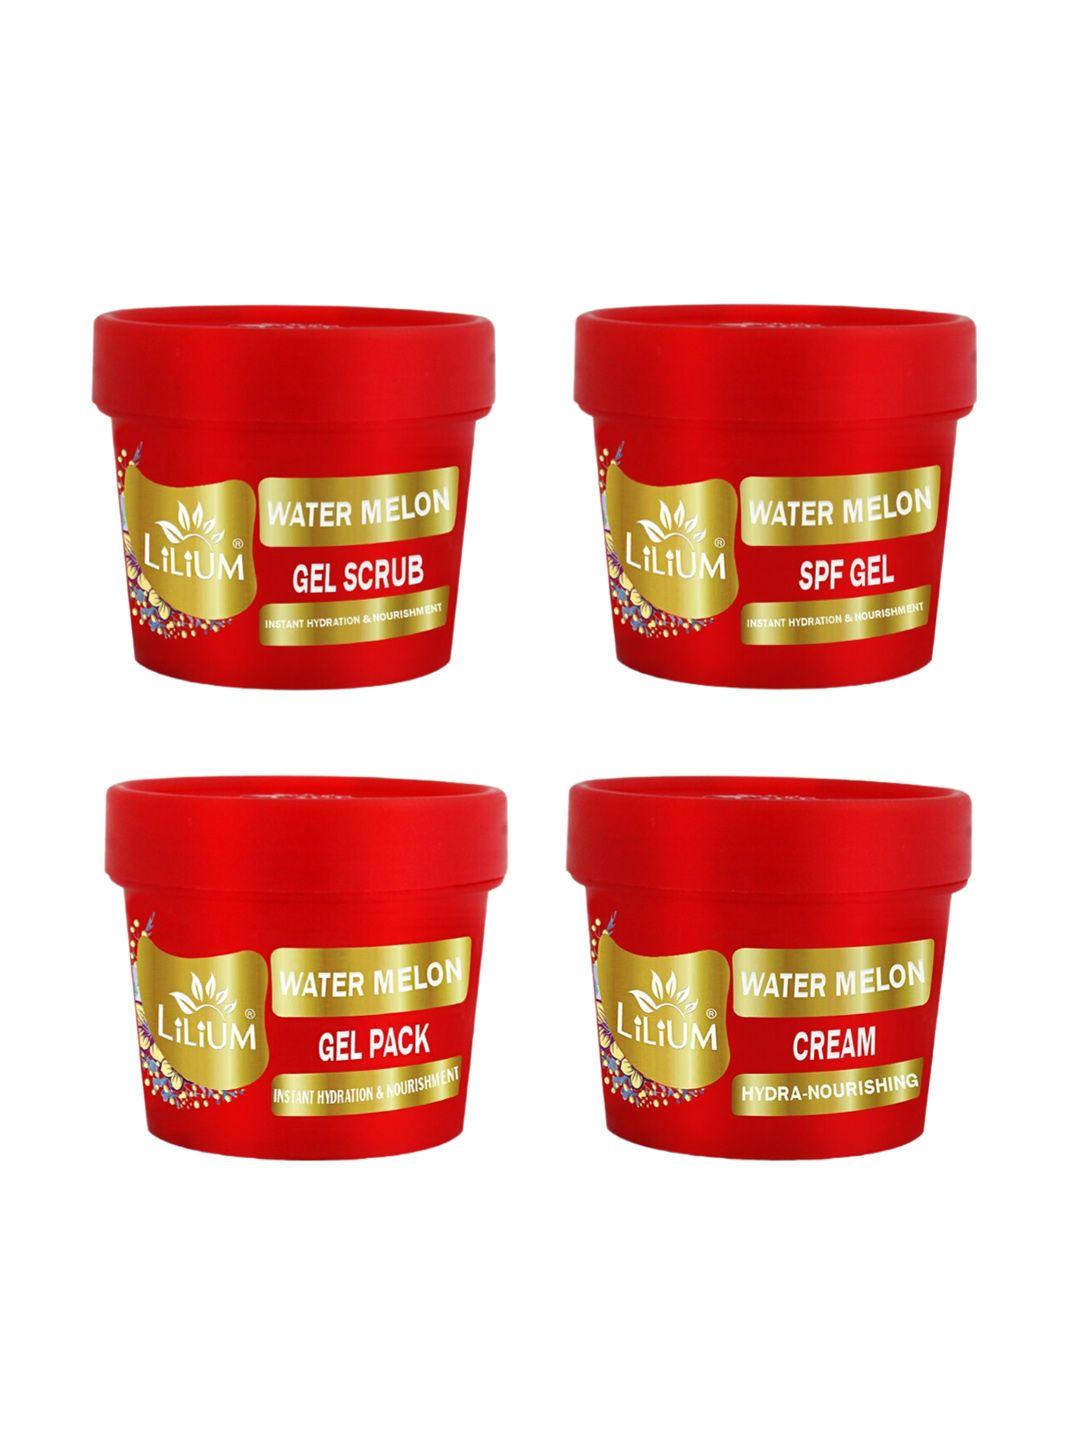 lilium water melon facial scrub gel pack cream set for deep nourishment - 100g each